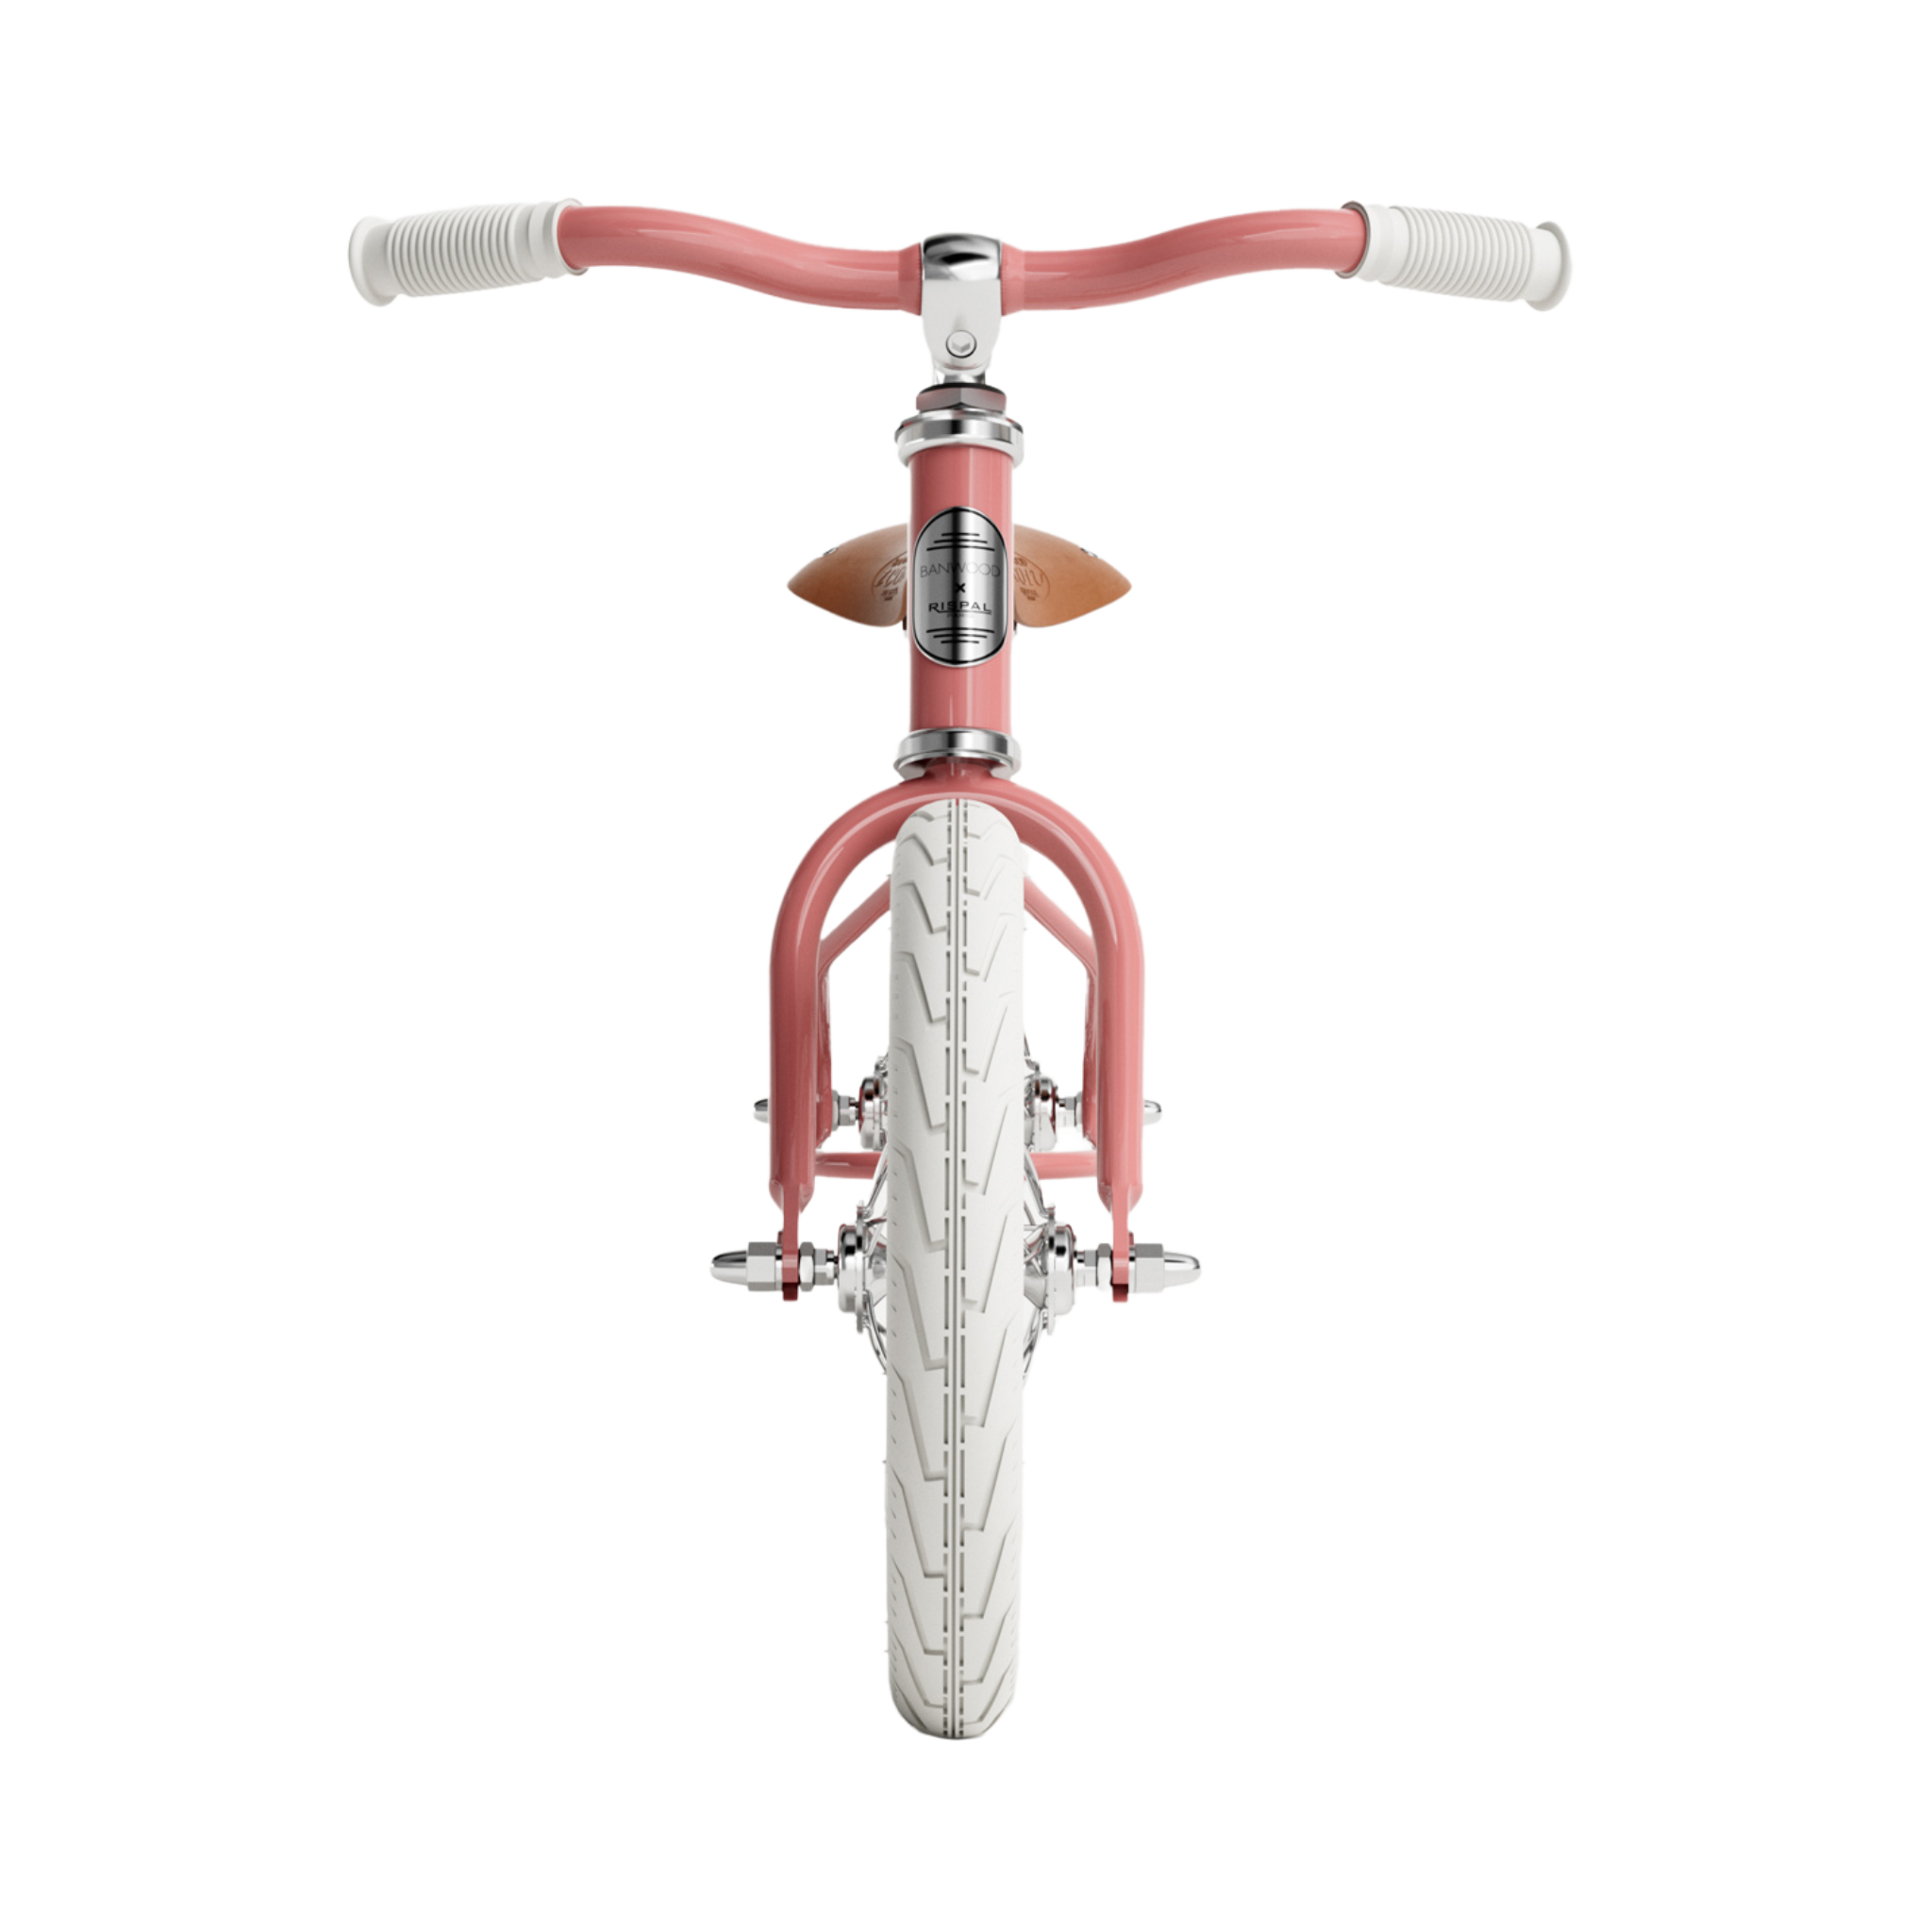 Icon Balance Bike - Rose